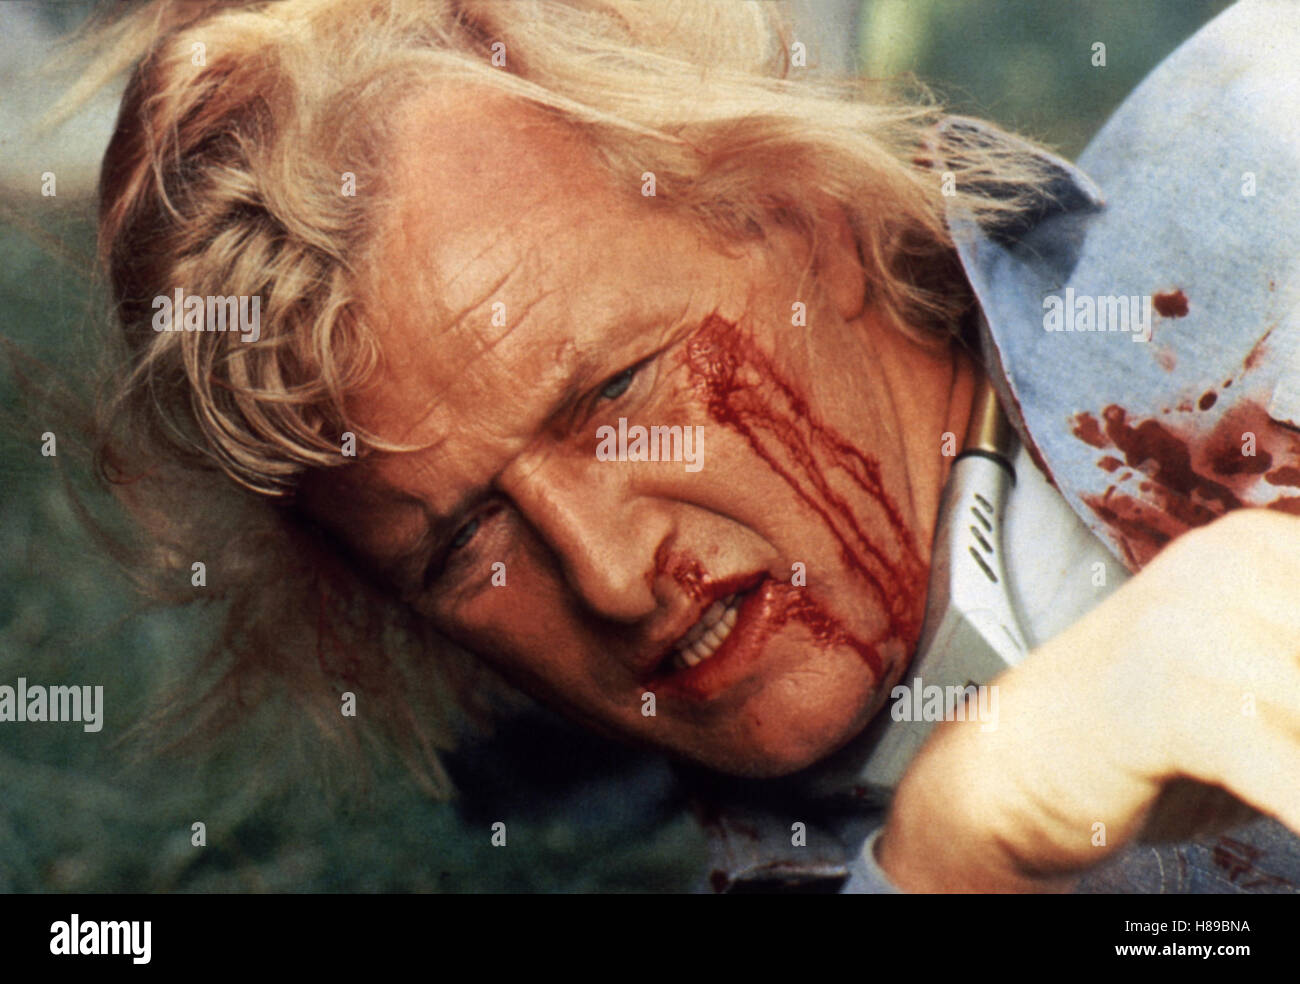 Wedlock, (WEDLOCK) USA 1991, Regie: Lewis Teague, RUTGER HAUER, Key: Blut, Verletzter Stock Photo